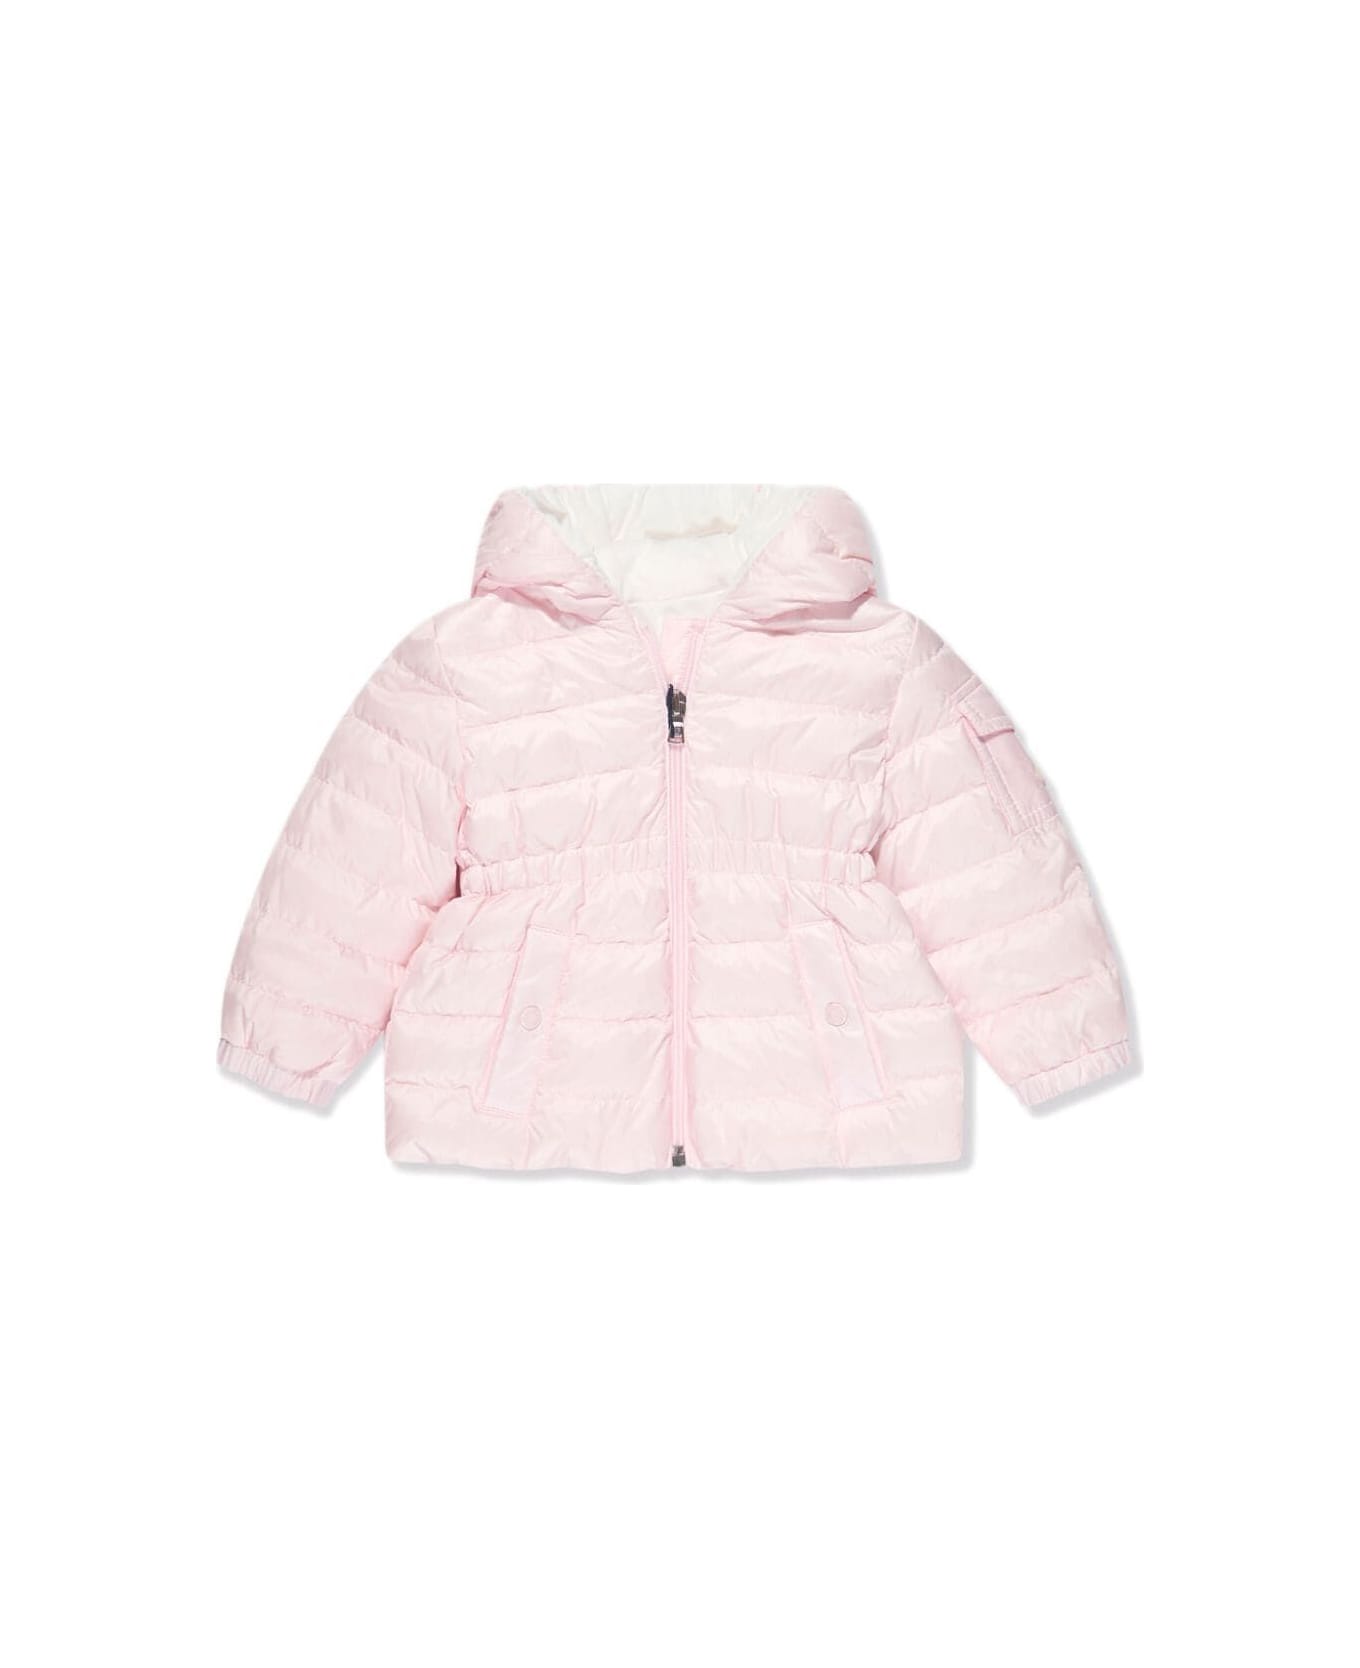 Moncler Dalles Jacket - B Pink